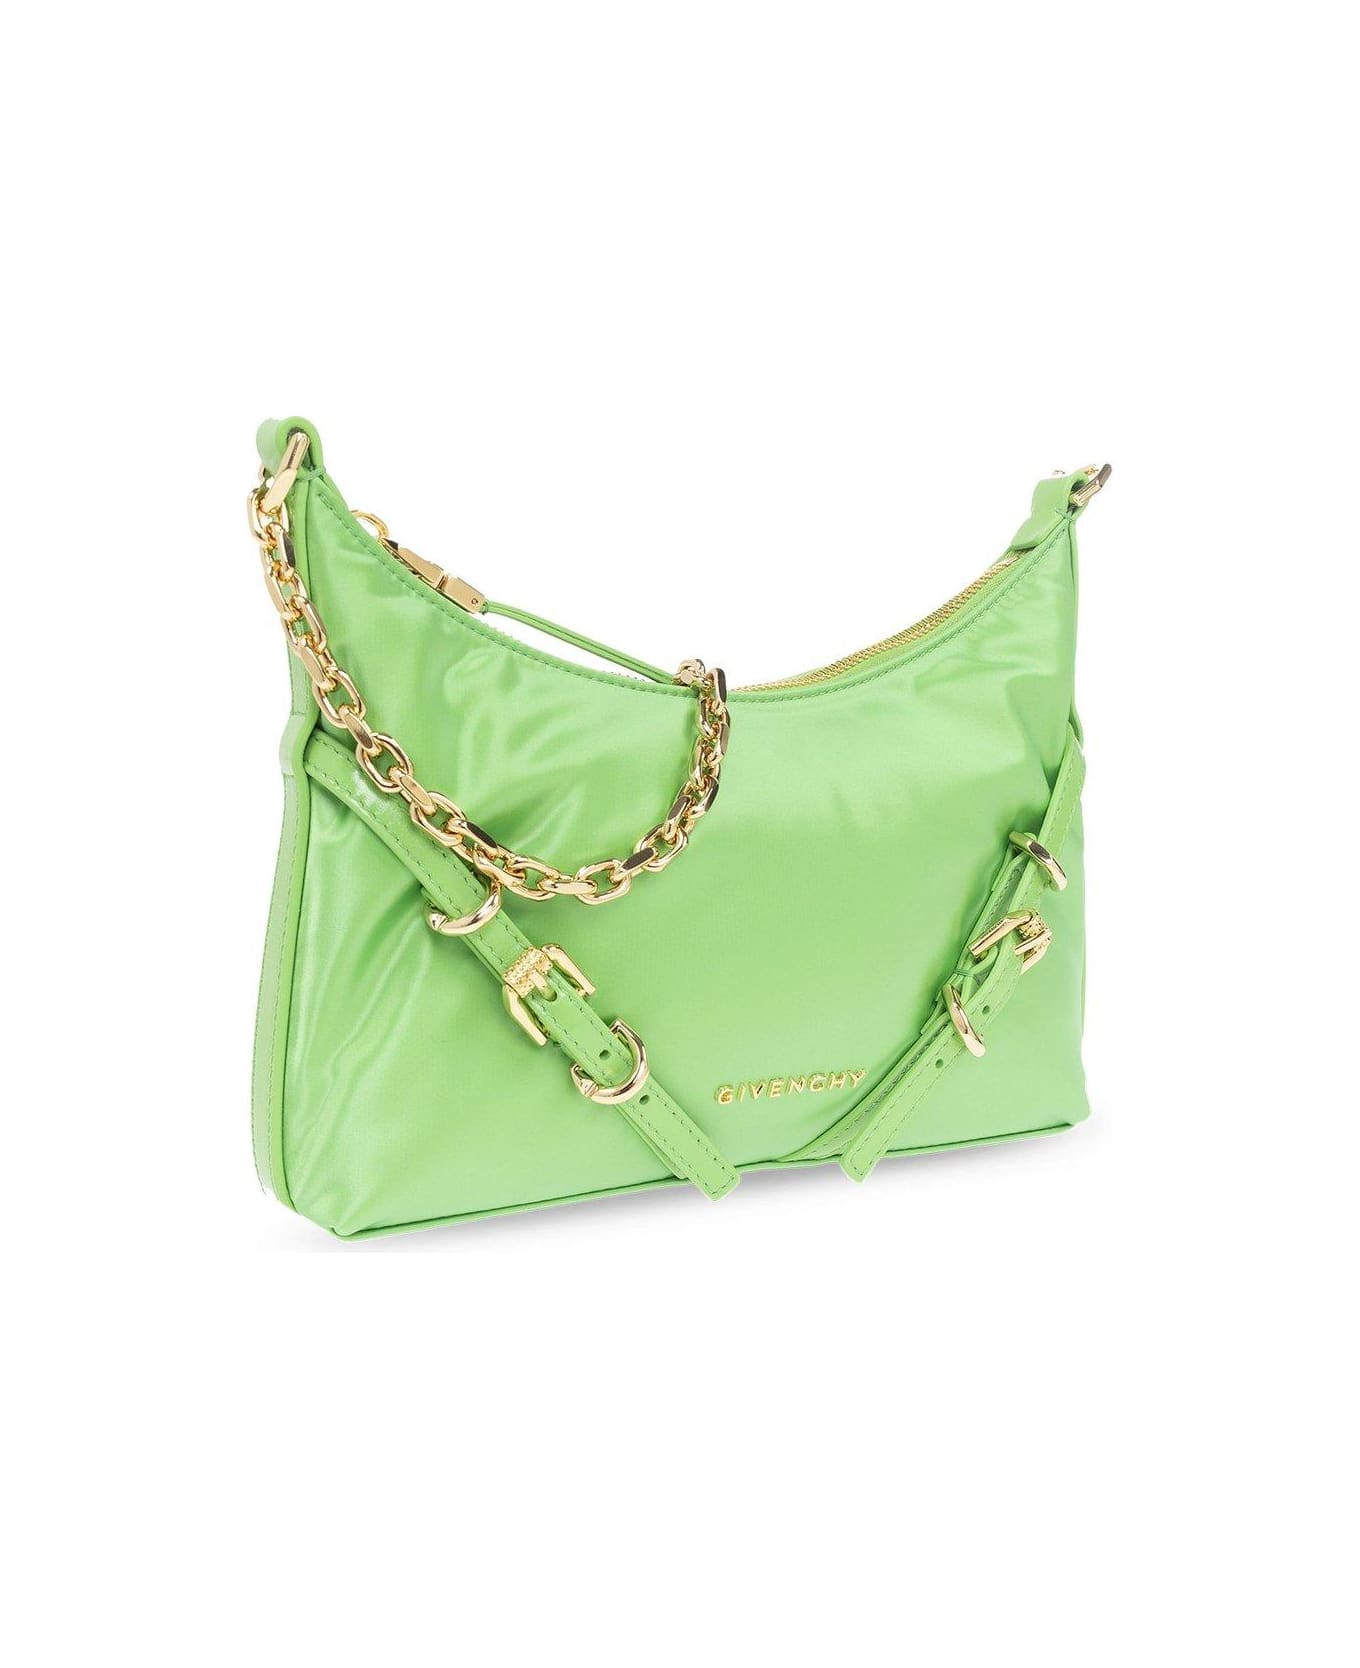 Givenchy Voyou Party Shoulder Bag - Green